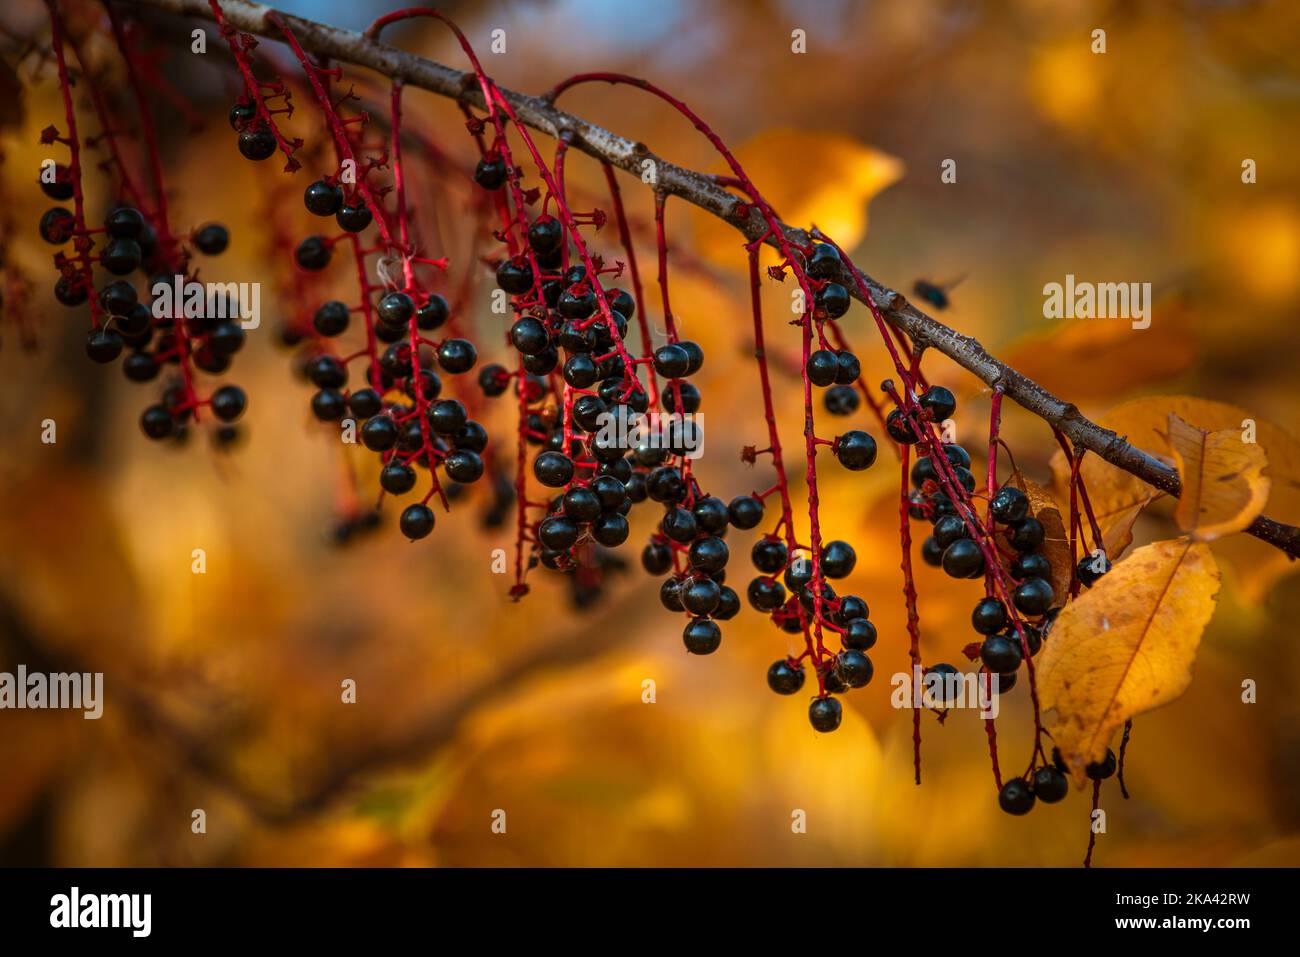 European Bird Cherry (Prunus padus) and Bracken (Pteridium aquilinum) with hoar-frost, autumnal colouring Autumn landscape  forest Stock Photo